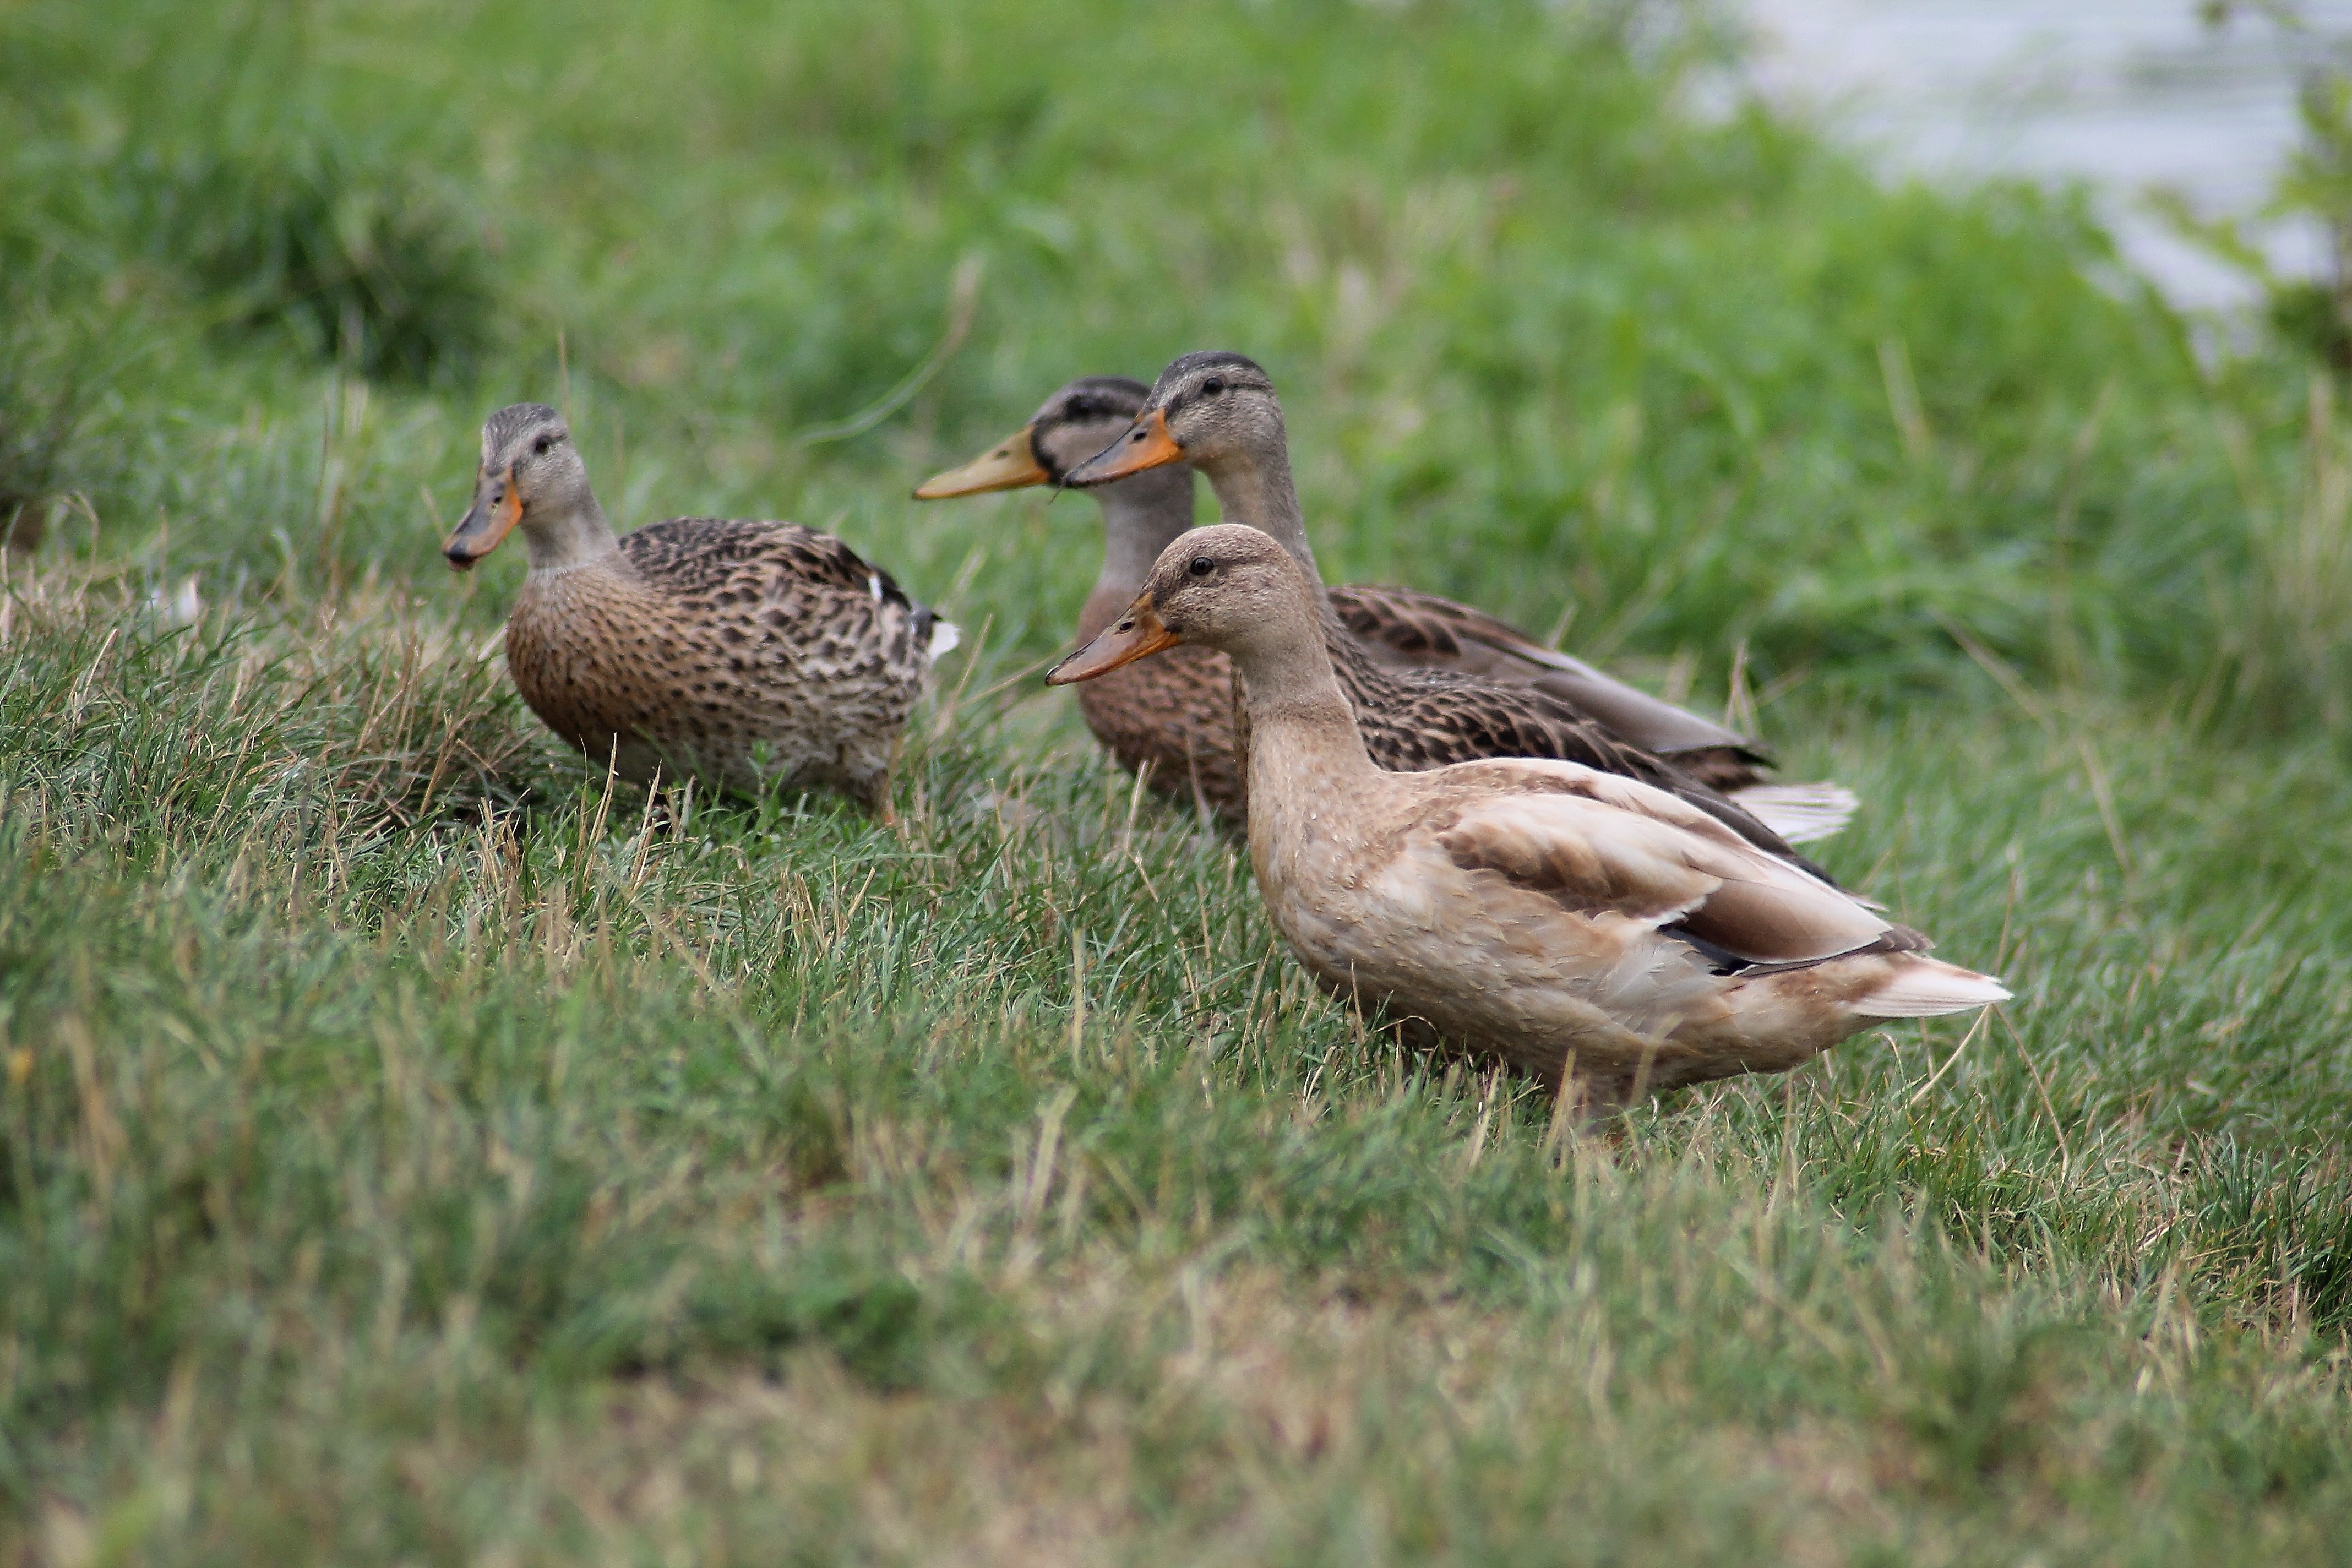 four ducks